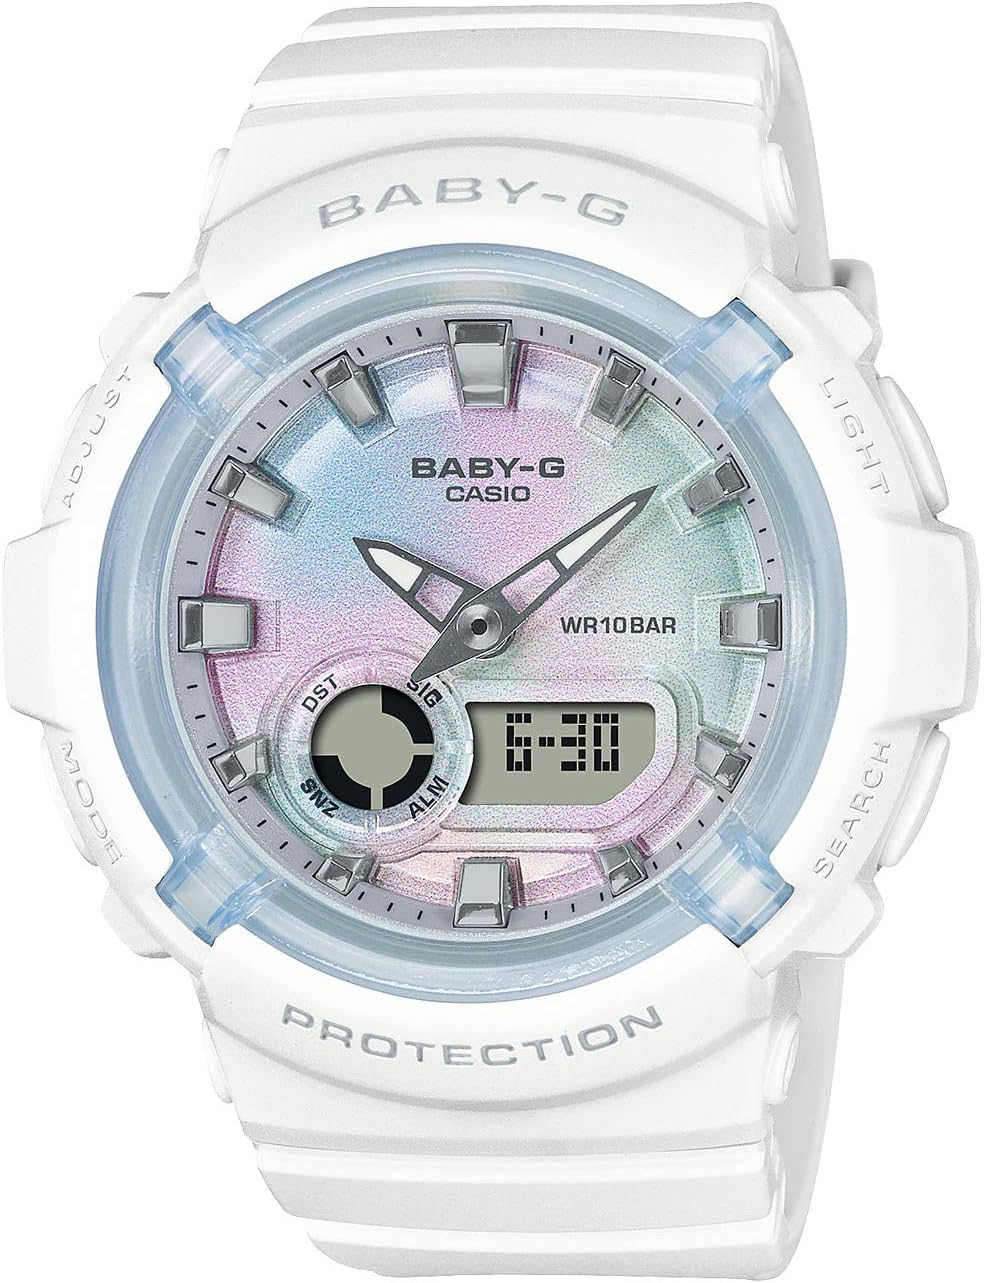 Casio] Watch Baby-G [Japan Import] BGA-280-7AJF White